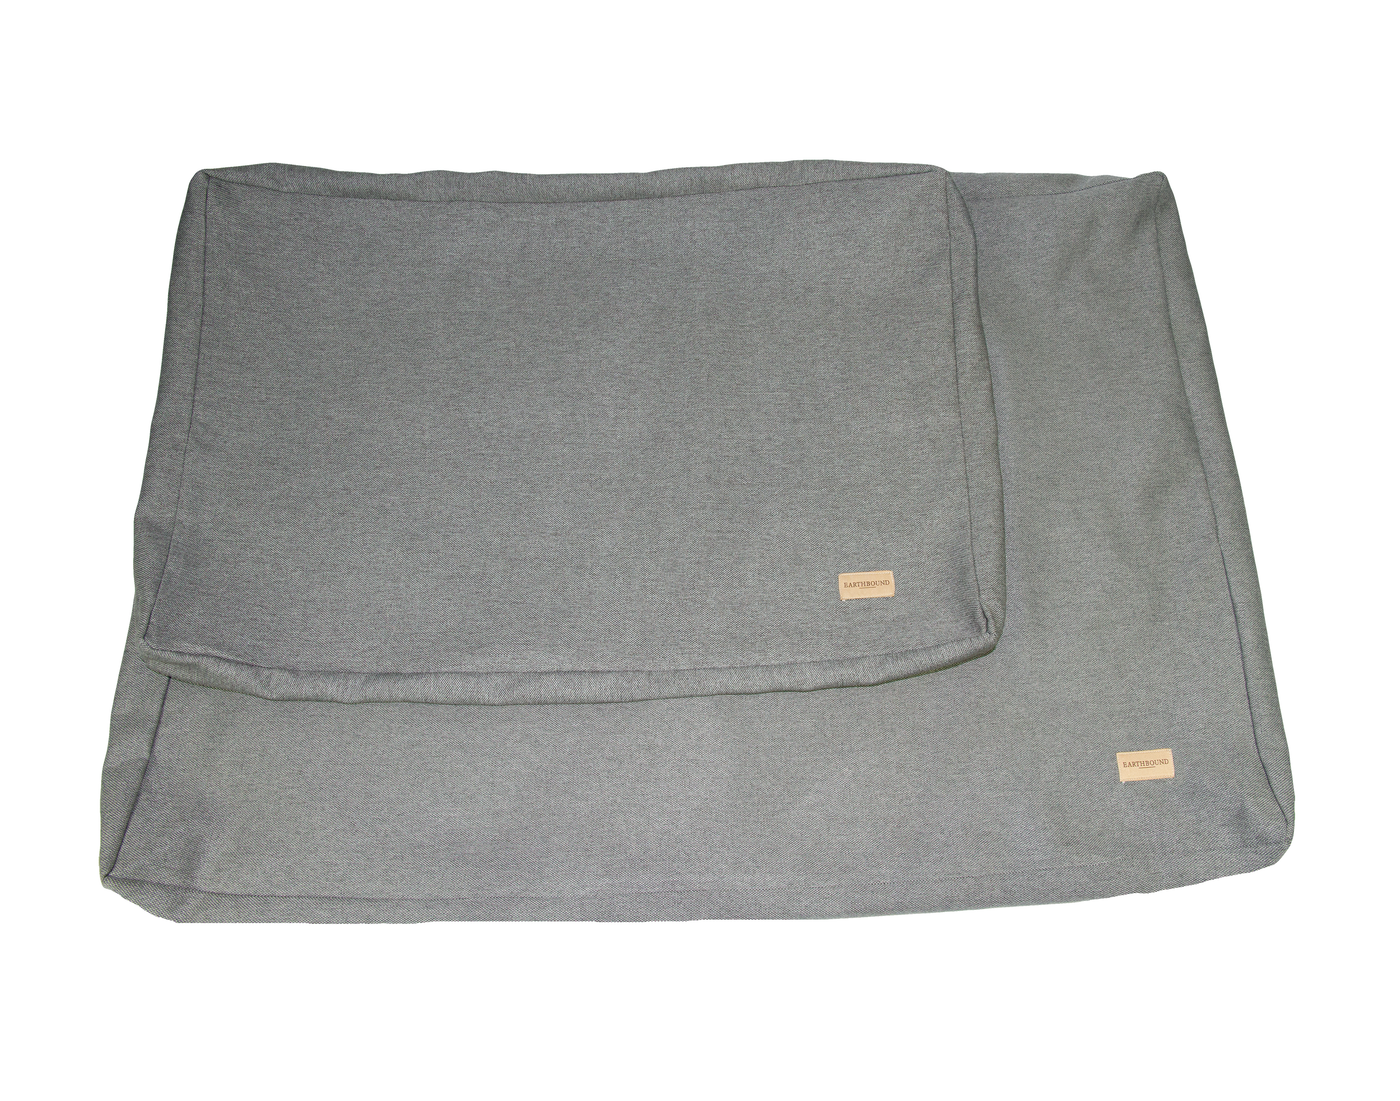 Replaceable camden grey memory foam cushion dog bed 